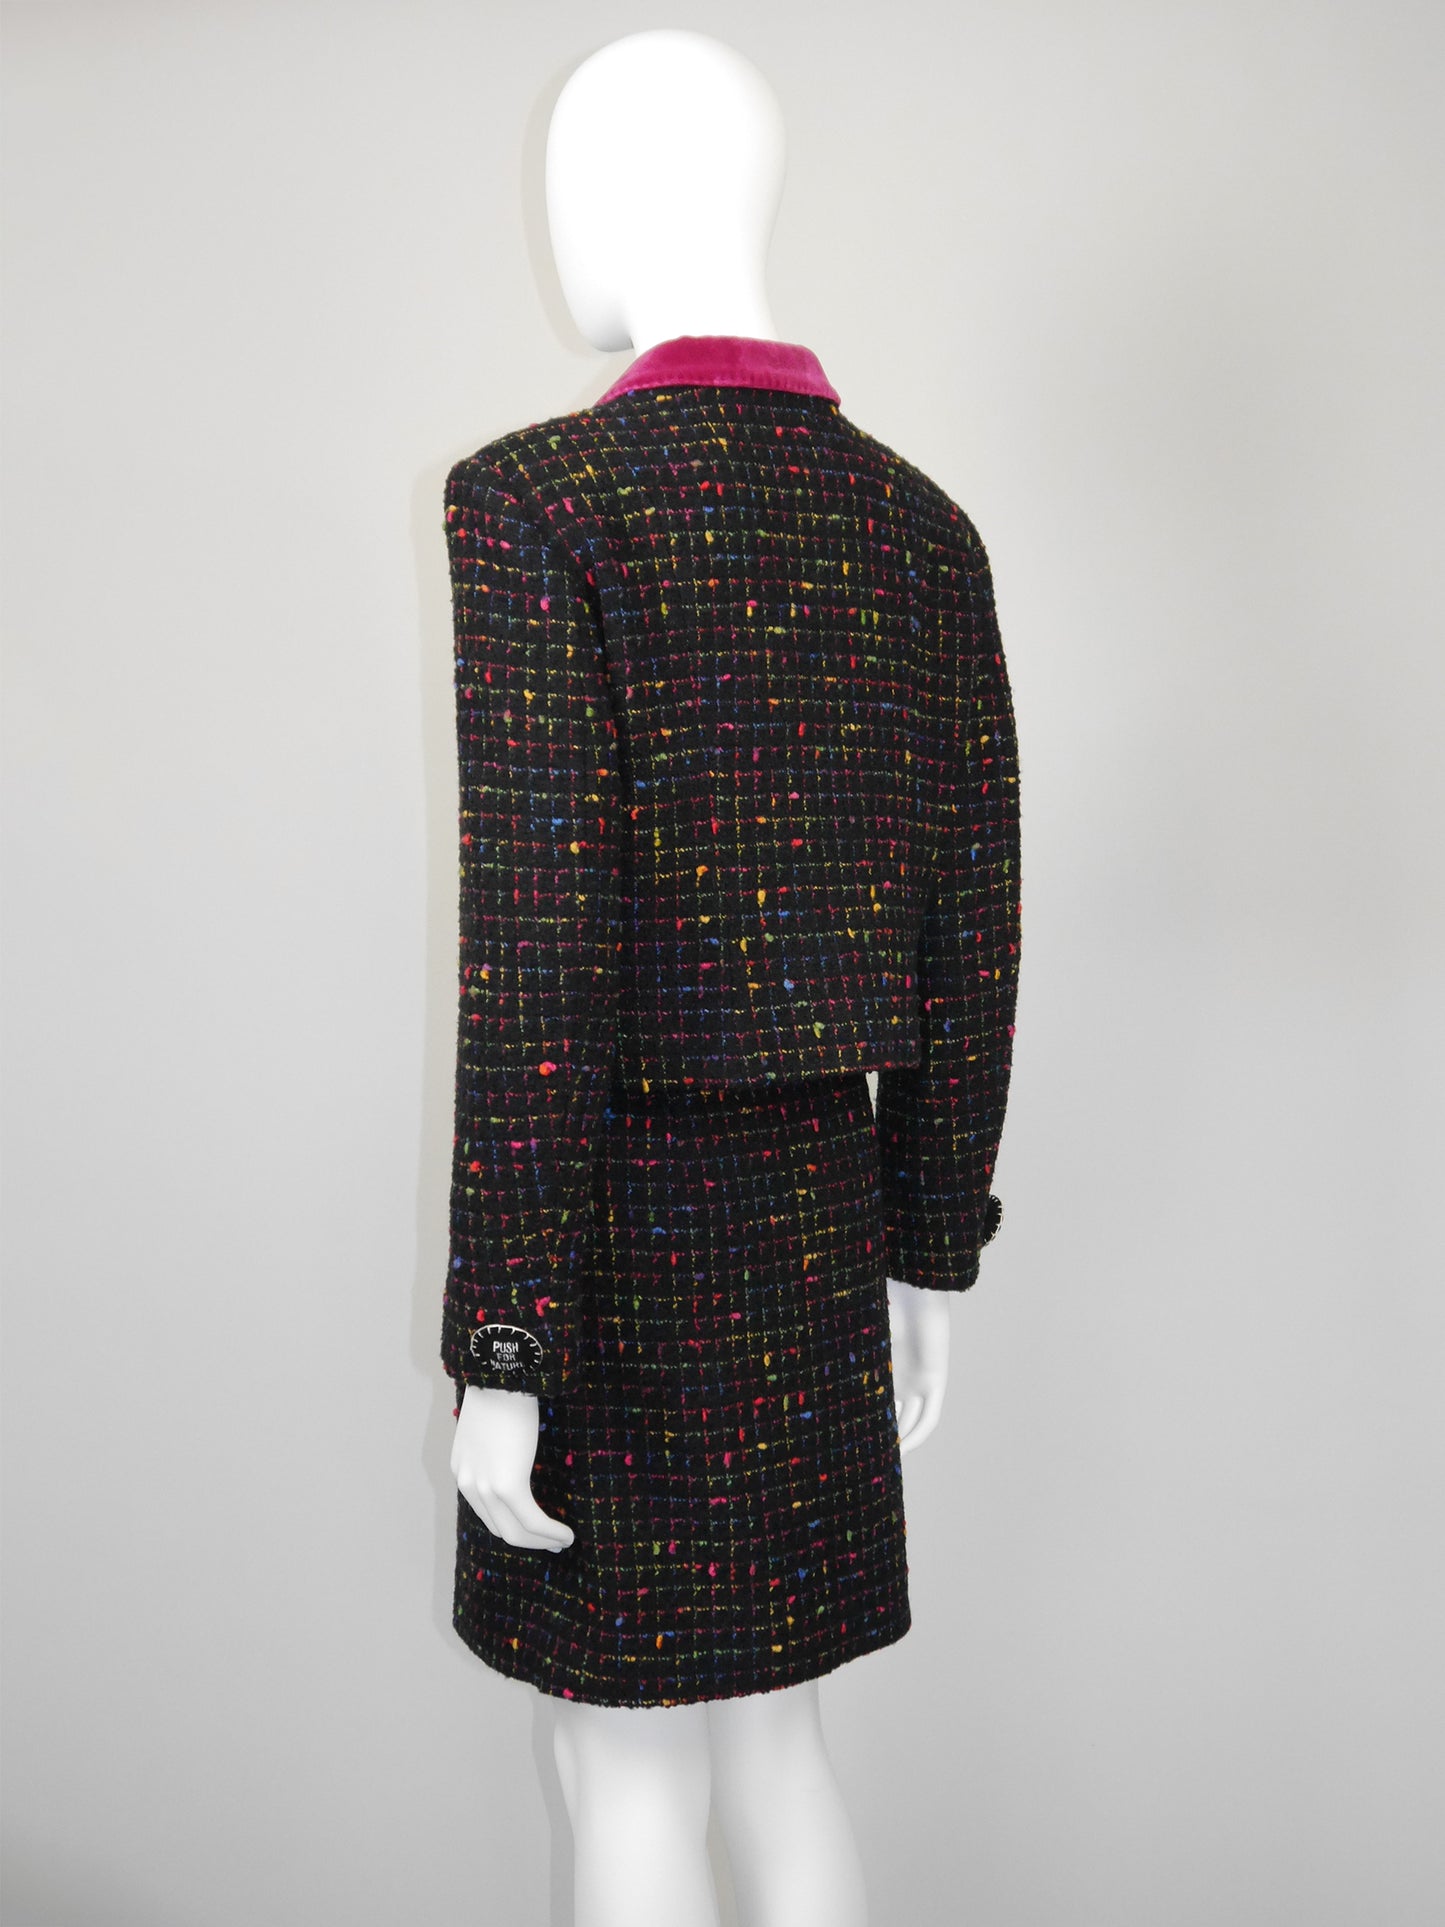 MOSCHINO 1990s Vintage "Push for Nature" Bouclé Jacket & Skirt Suit Size S-M